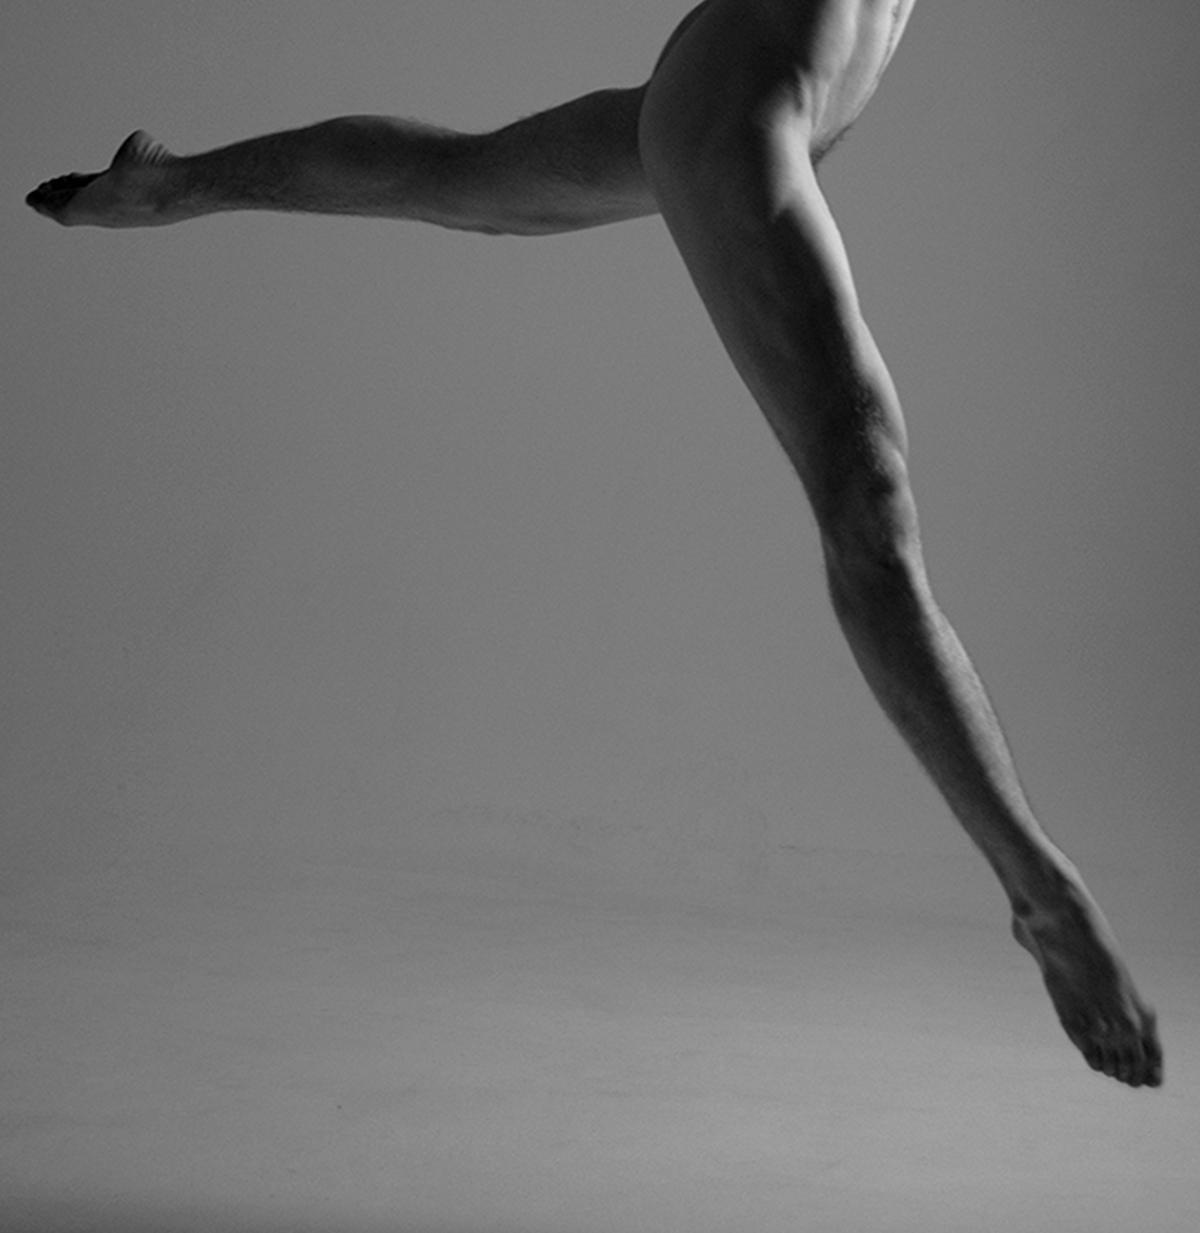 Apertura. The Bailarín, series. Male Nude dancer. Black & White photograph - Modern Photograph by Ricky Cohete